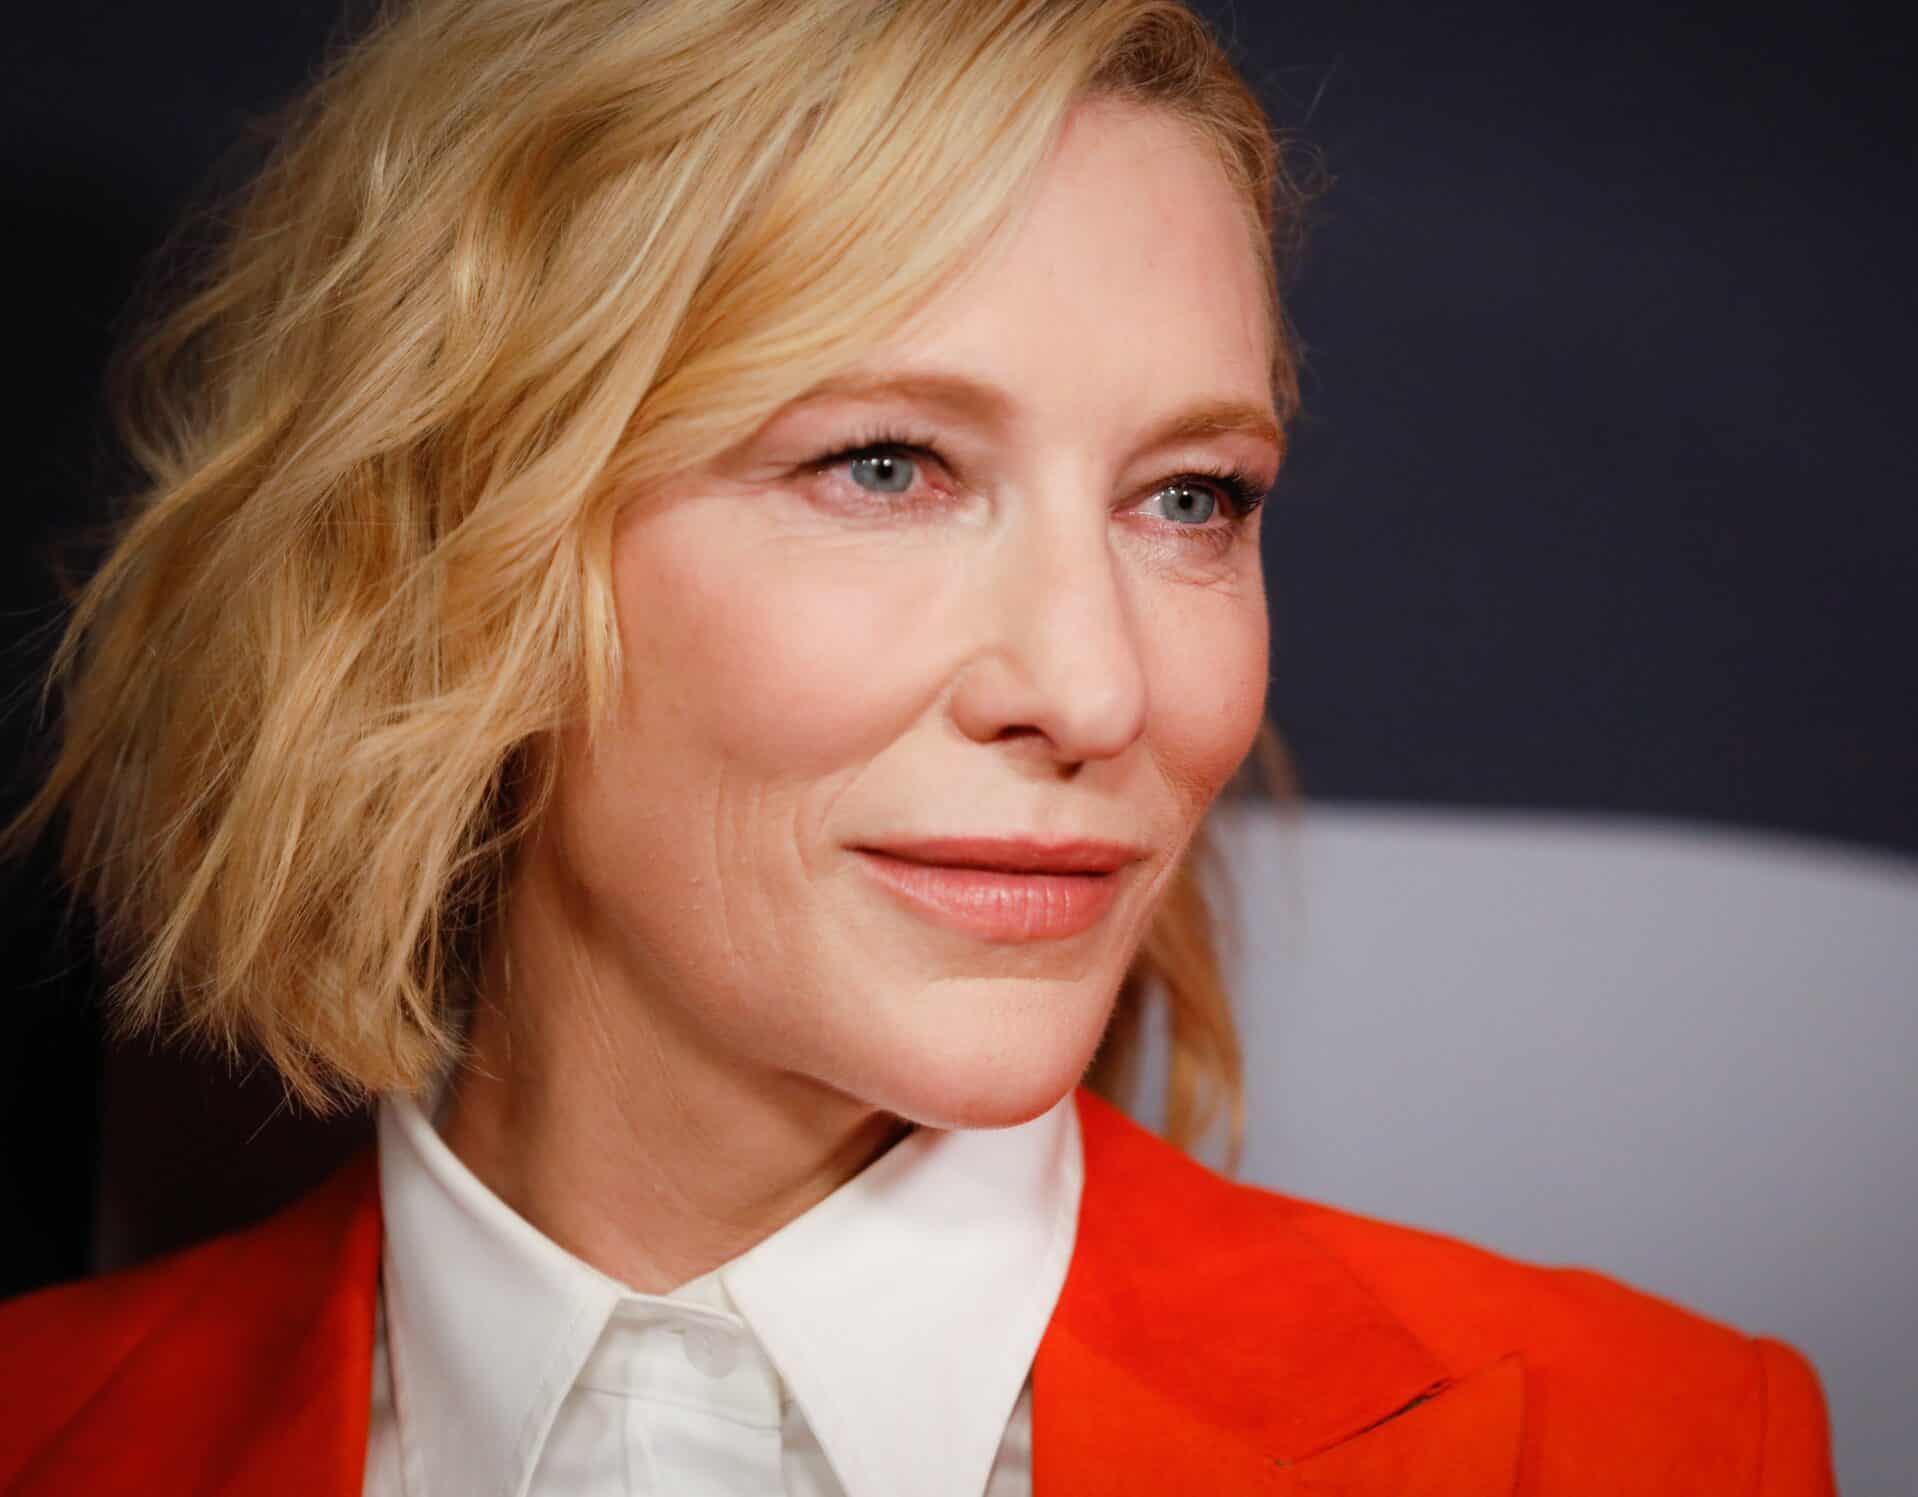 Cate Blanchett also ventured in directing